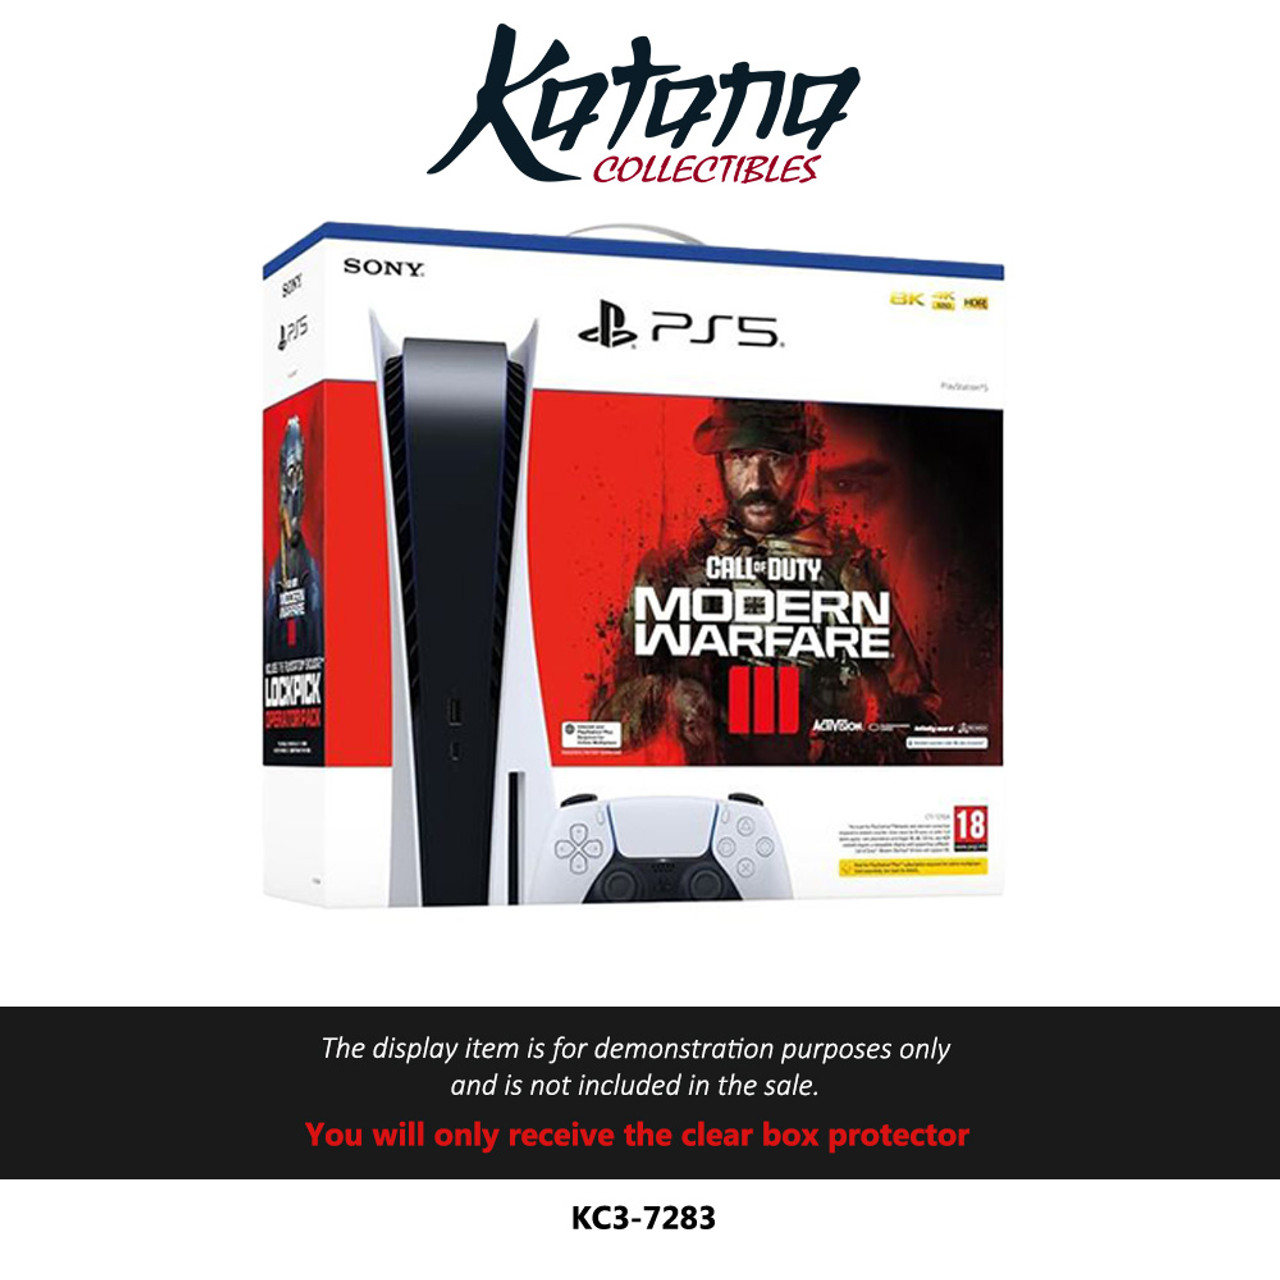 Katana Collectibles Protector For PlayStation 5 slim